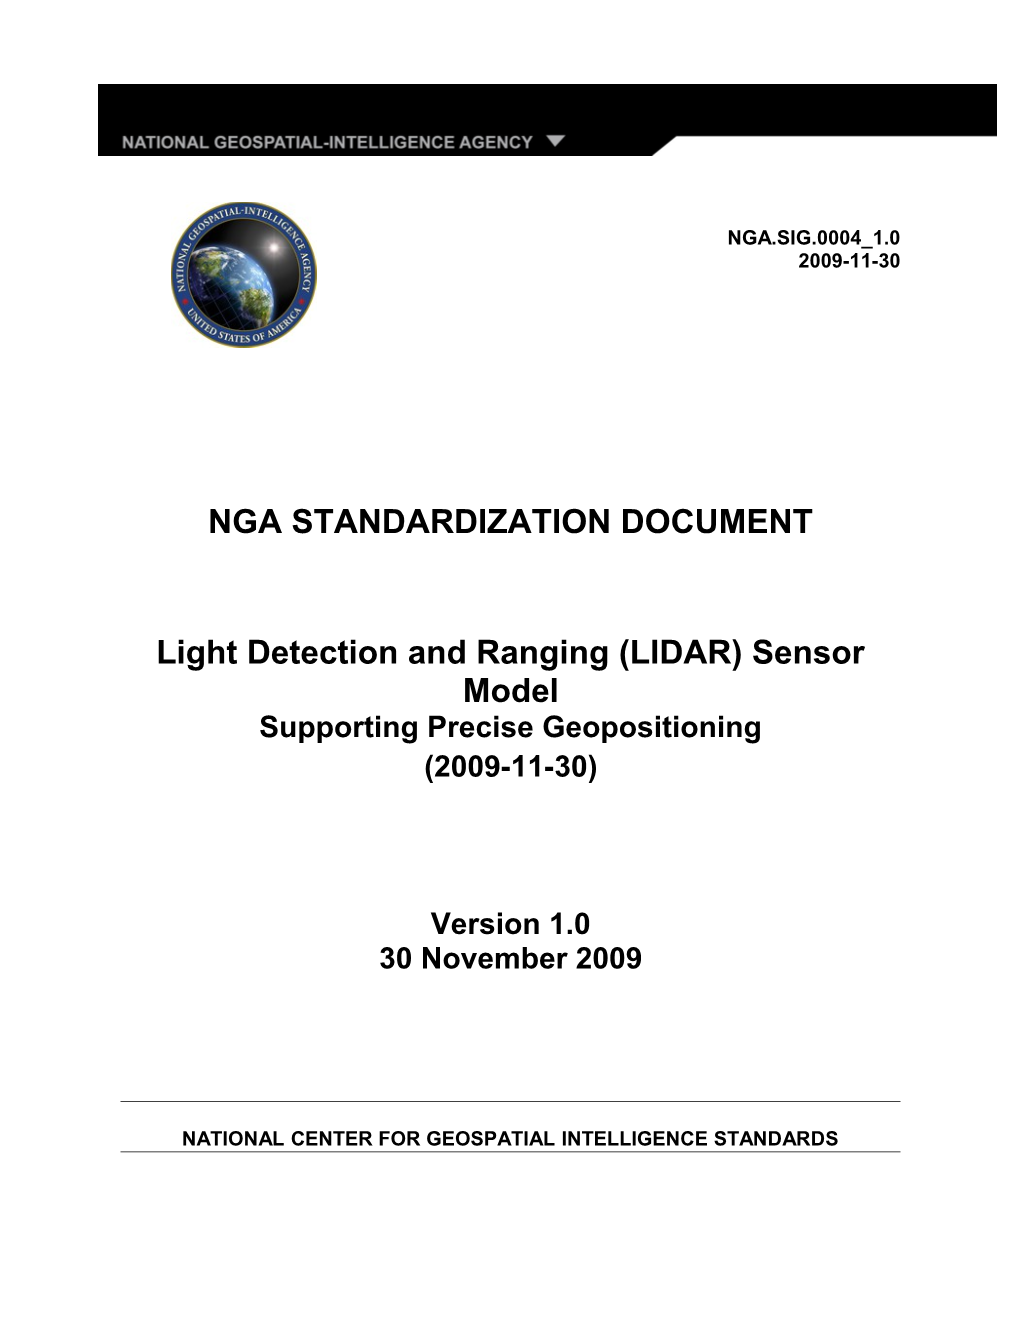 LIDAR Sensor Model Supporting Precise Geopositioning